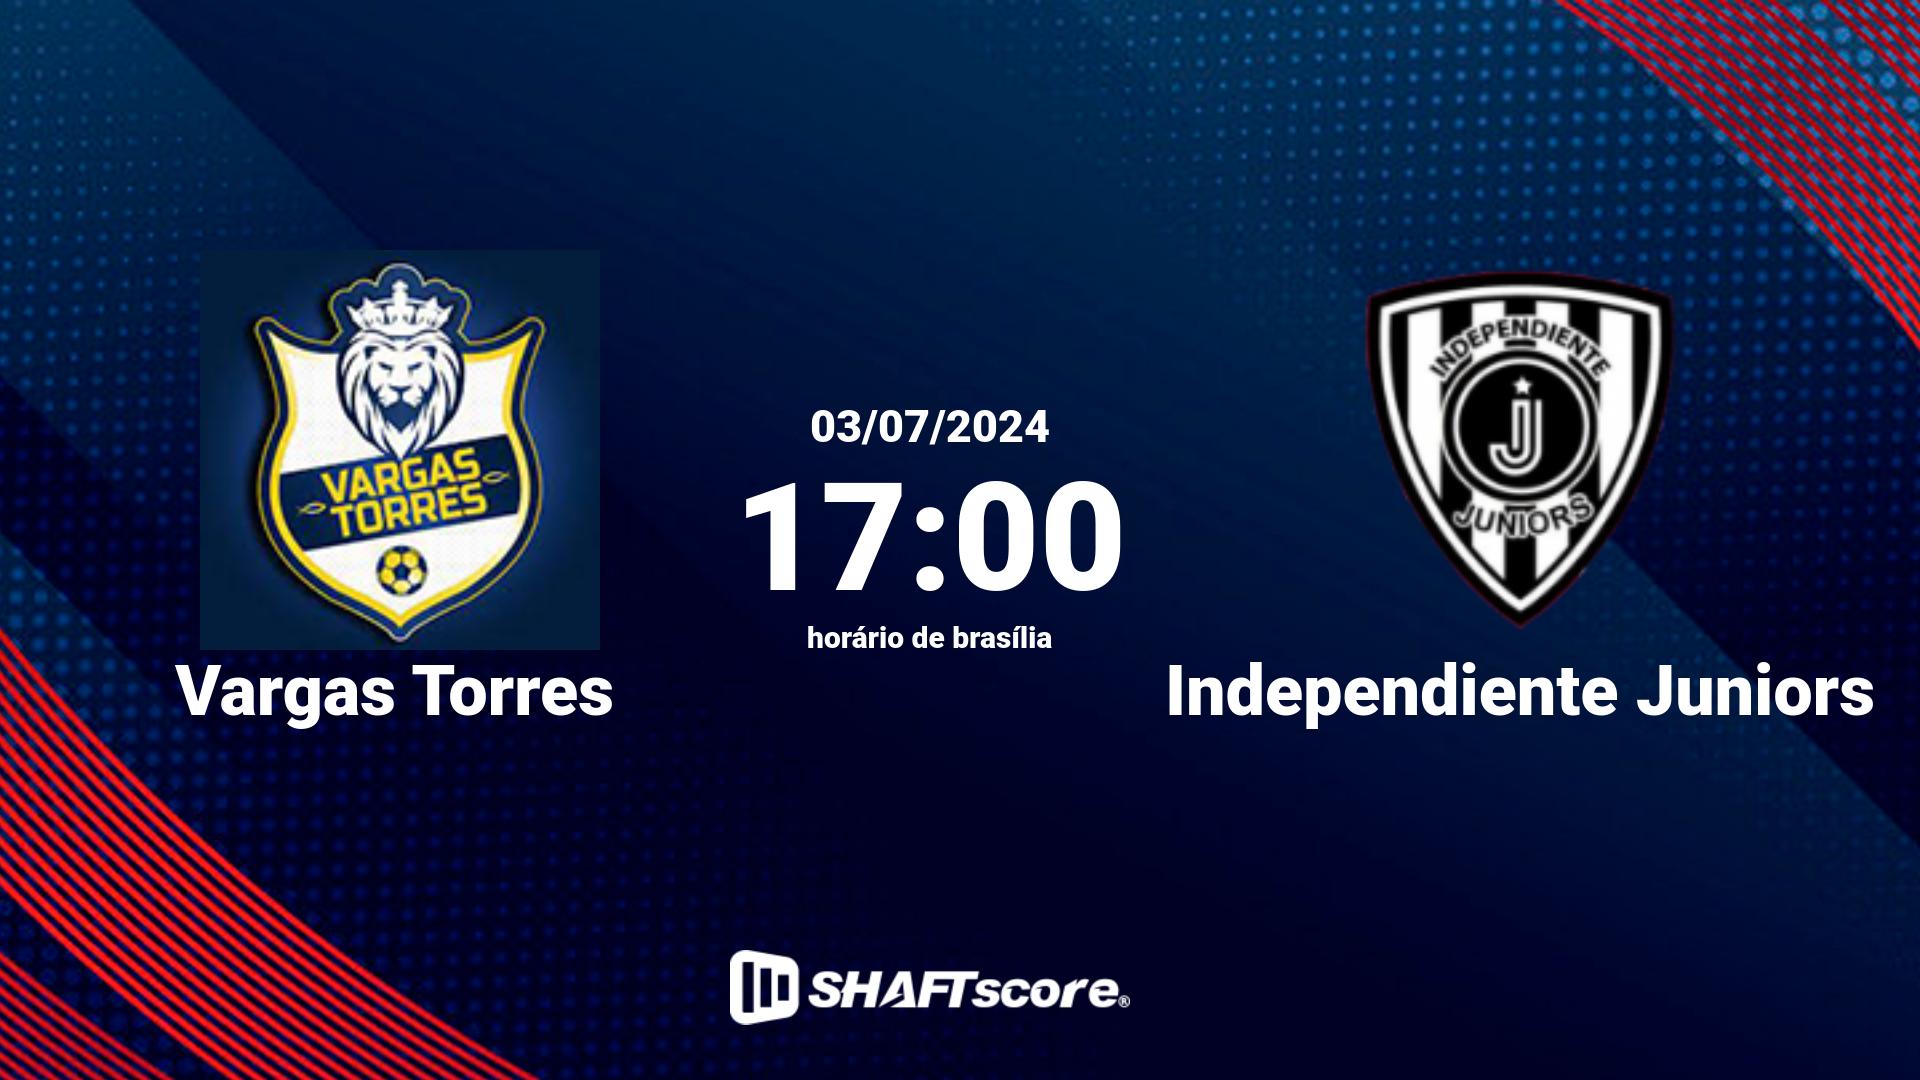 Estatísticas do jogo Vargas Torres vs Independiente Juniors 03.07 17:00